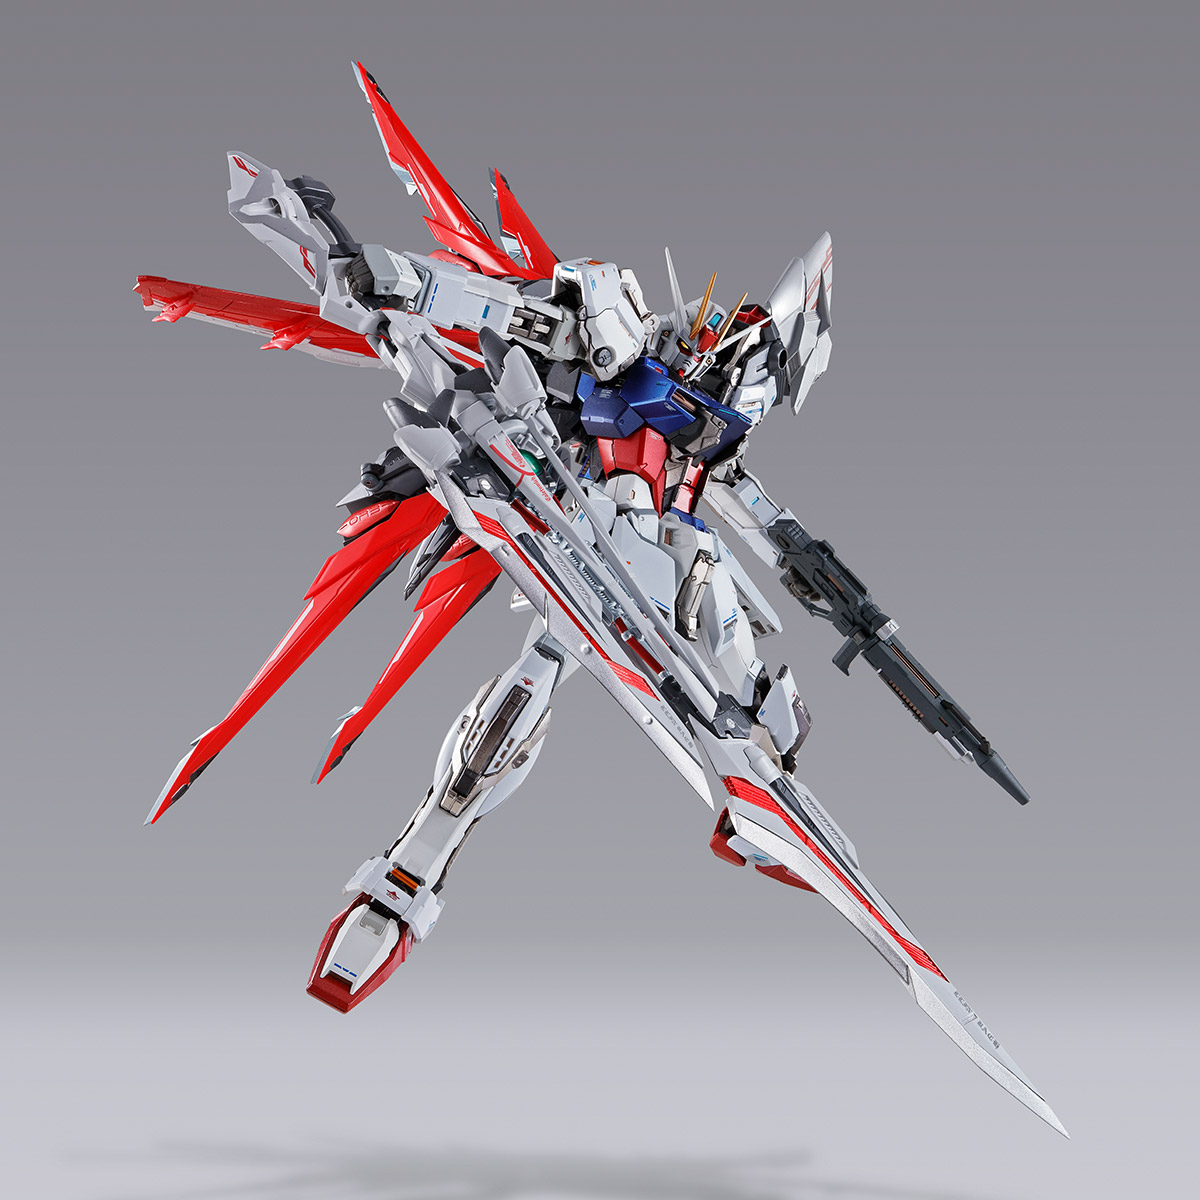 Premium BANDAI METAL BUILD CALETVWLCH OPTION SET for Alternative Strike Gundam 